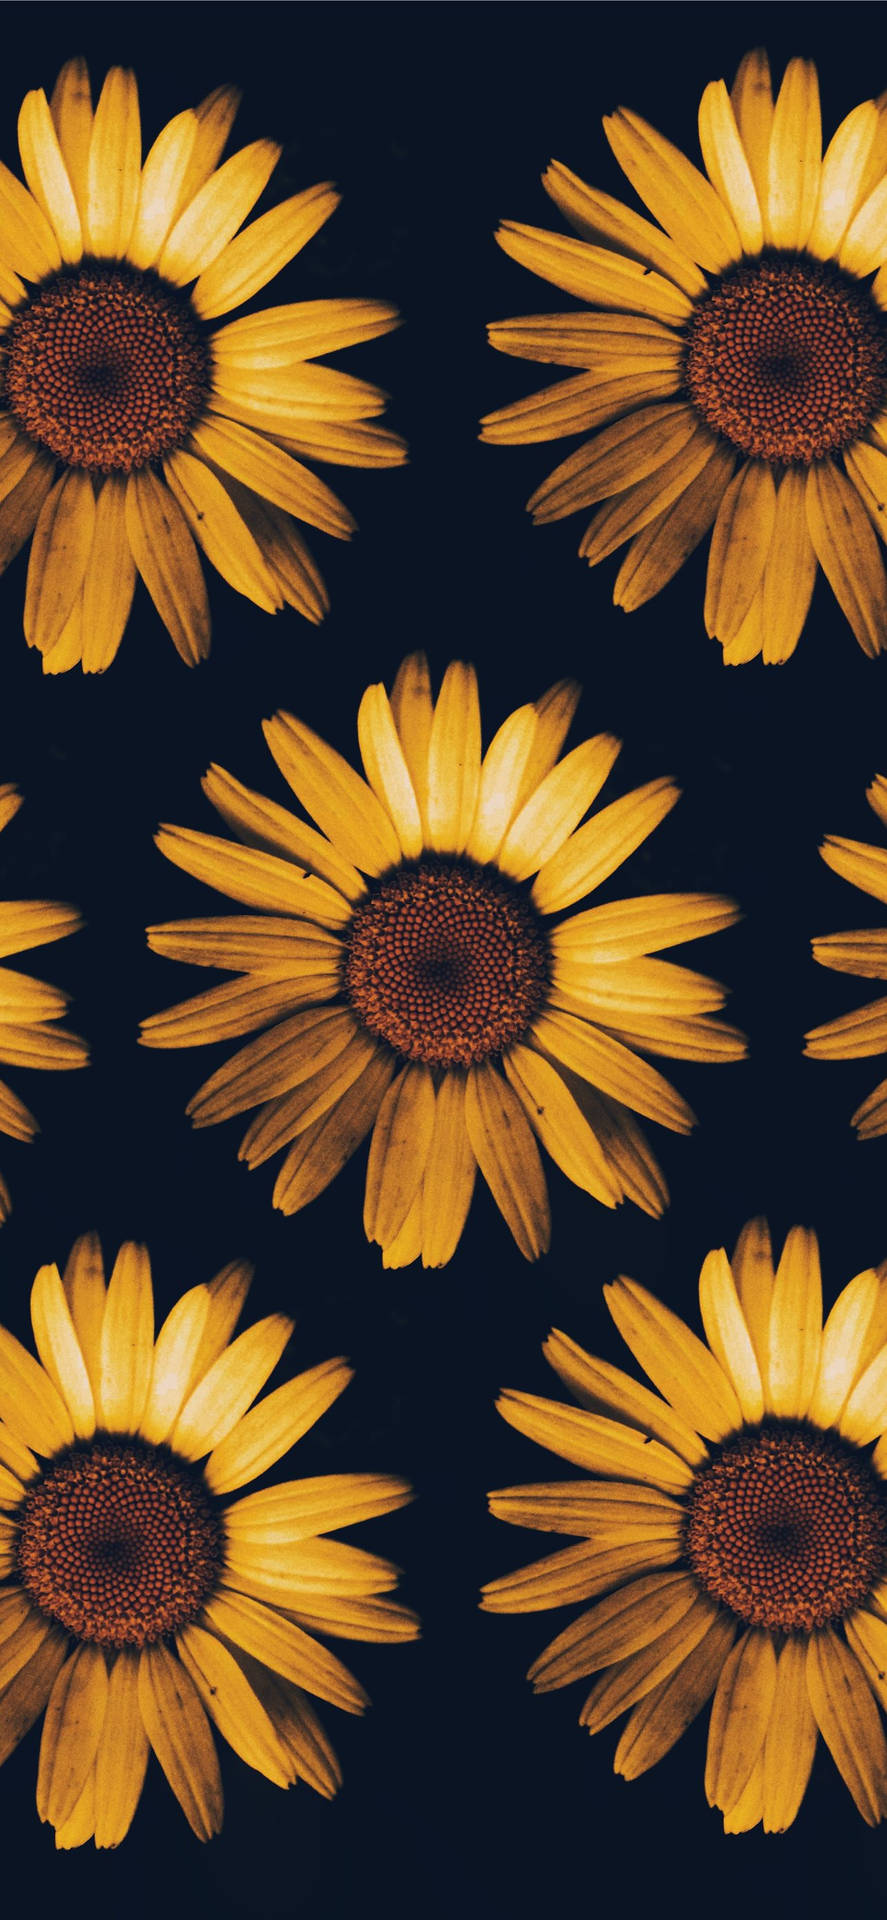 Sunflower Iphone Background Wallpaper